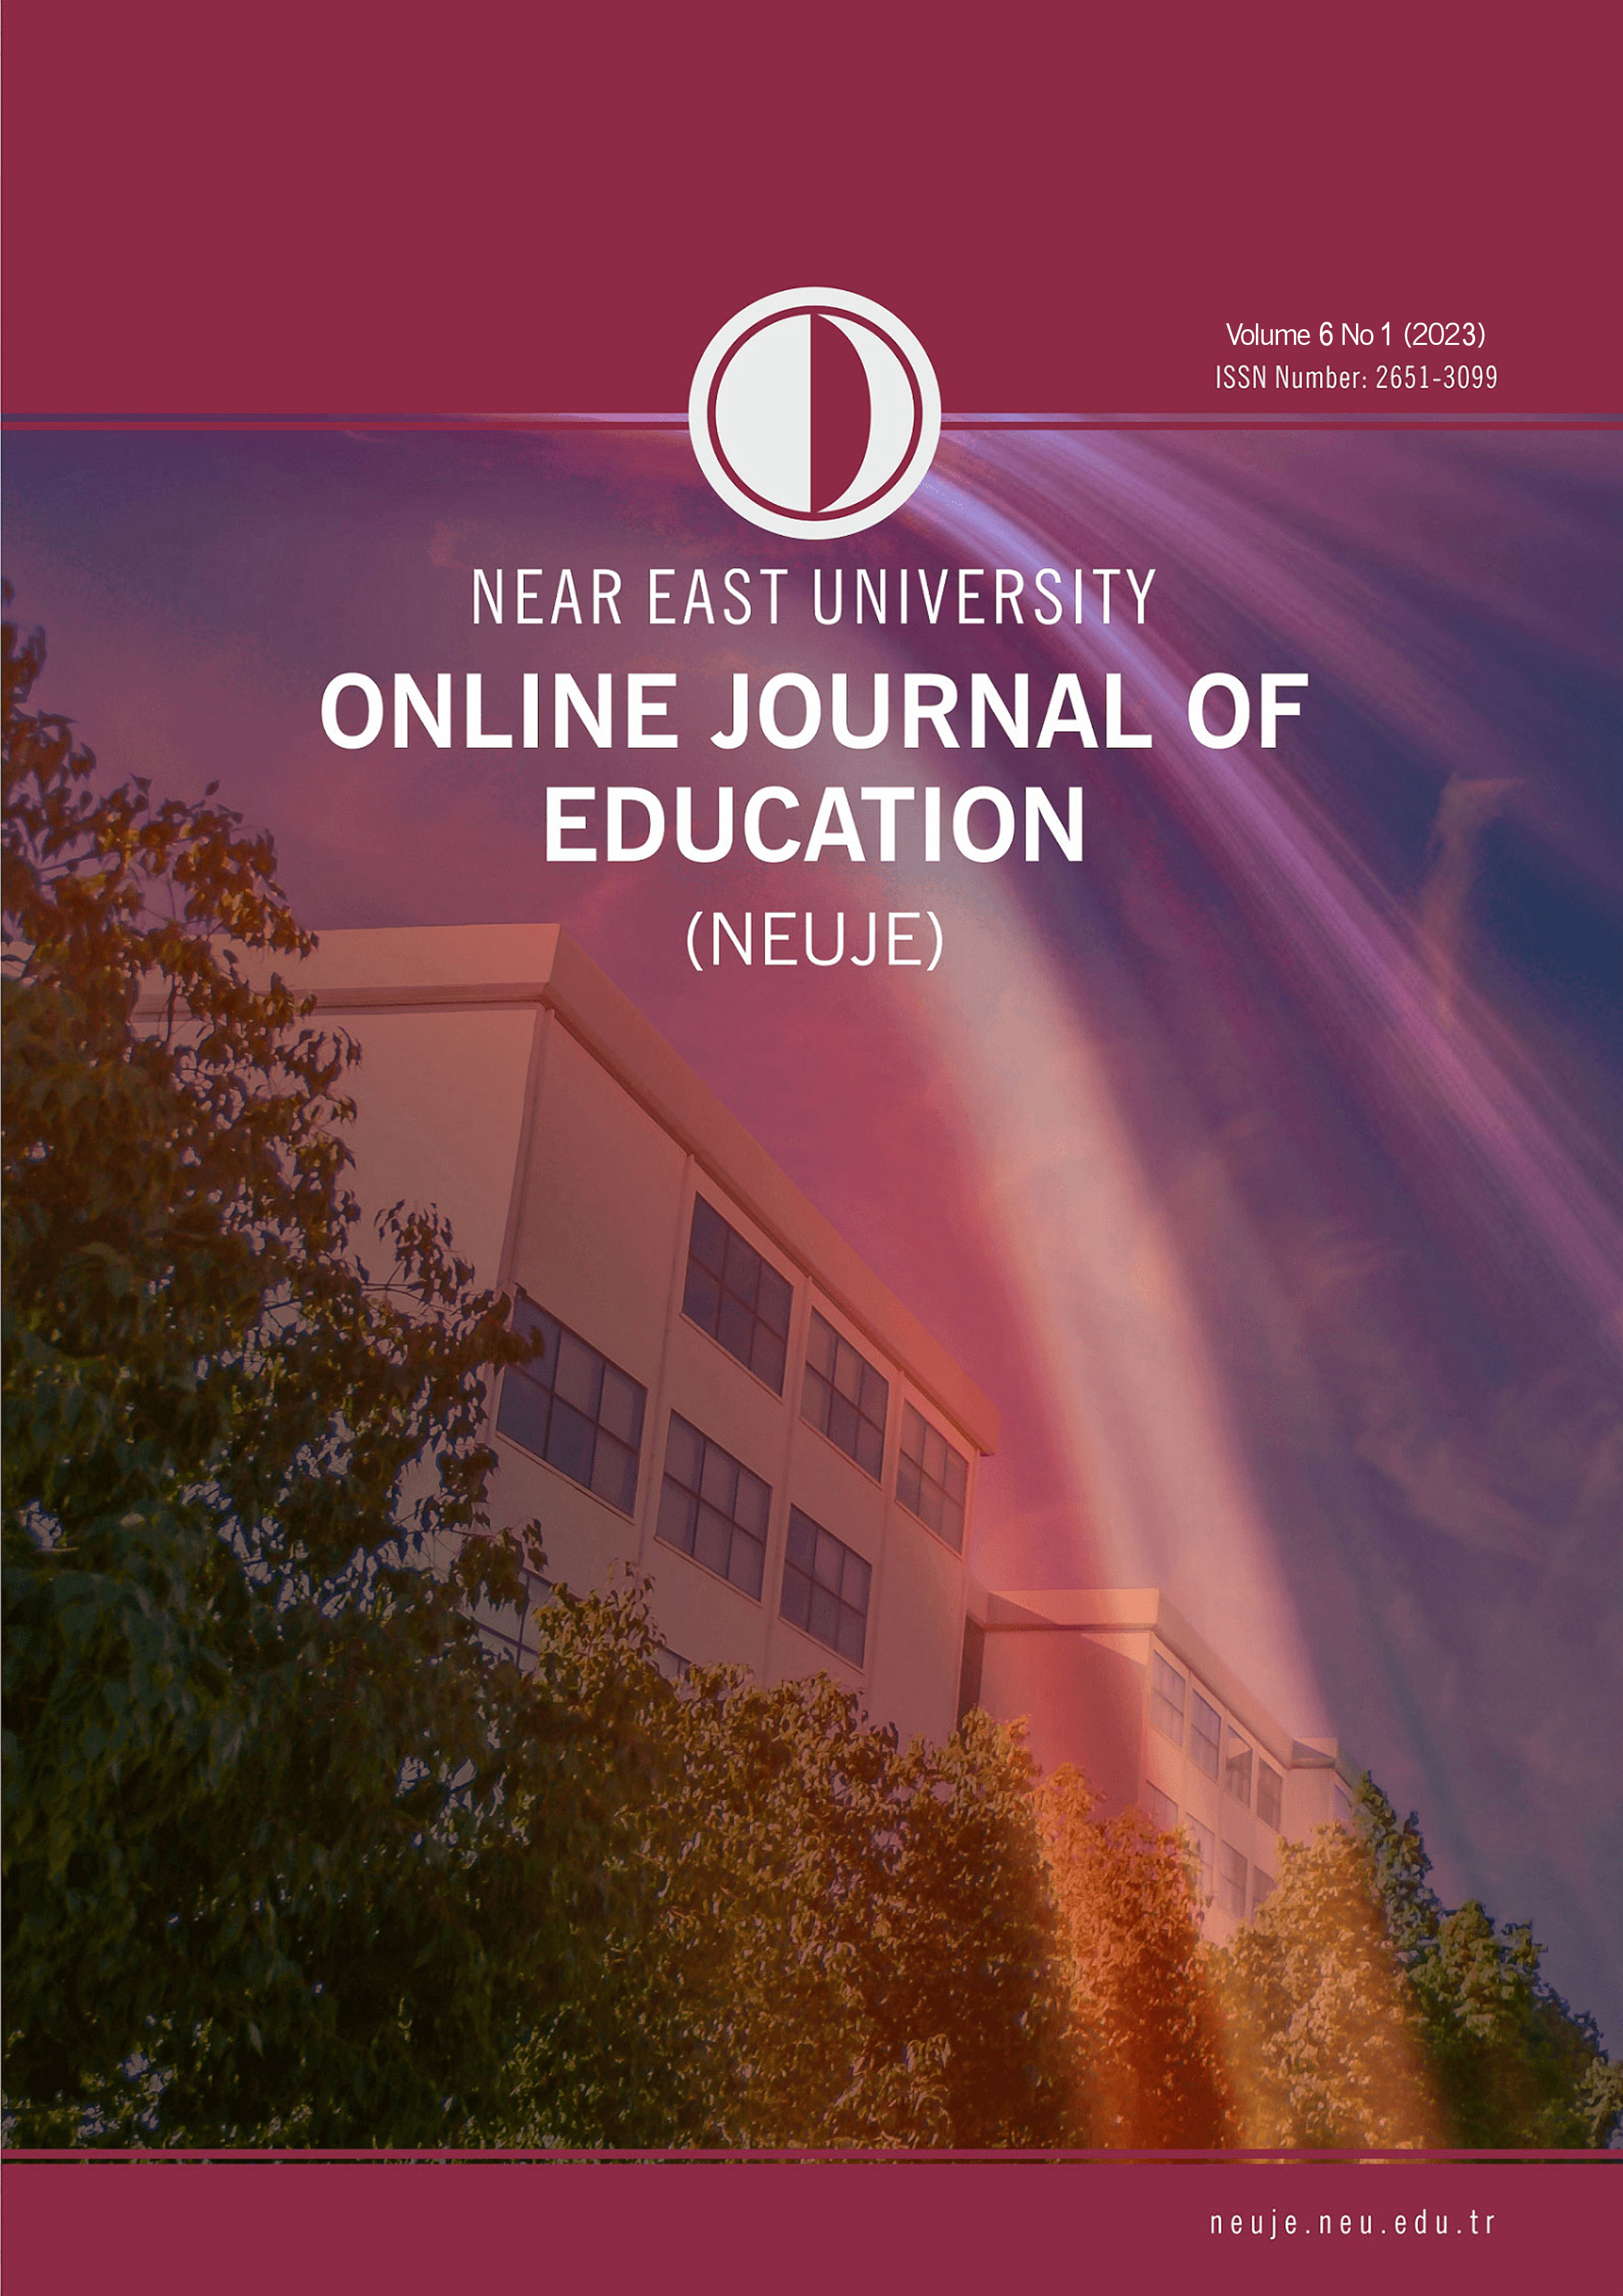 					View Vol. 6 No. 1 (2023): Near East University Online Journal of Education - NEUJE
				